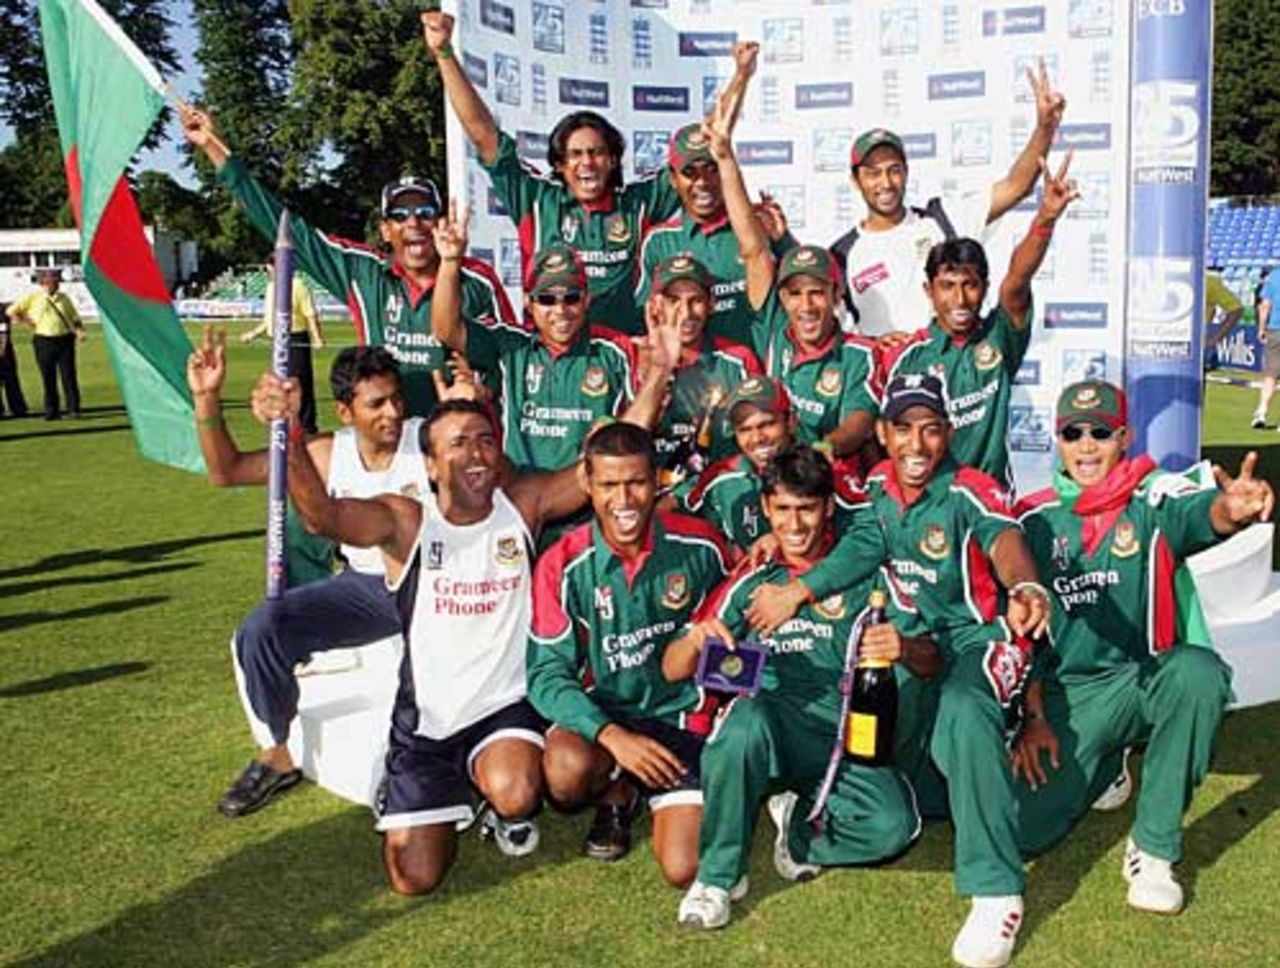 Bangladesh celebrate their win over Australia, Australia v Bangladesh, NatWest Series, Cardiff, June 18